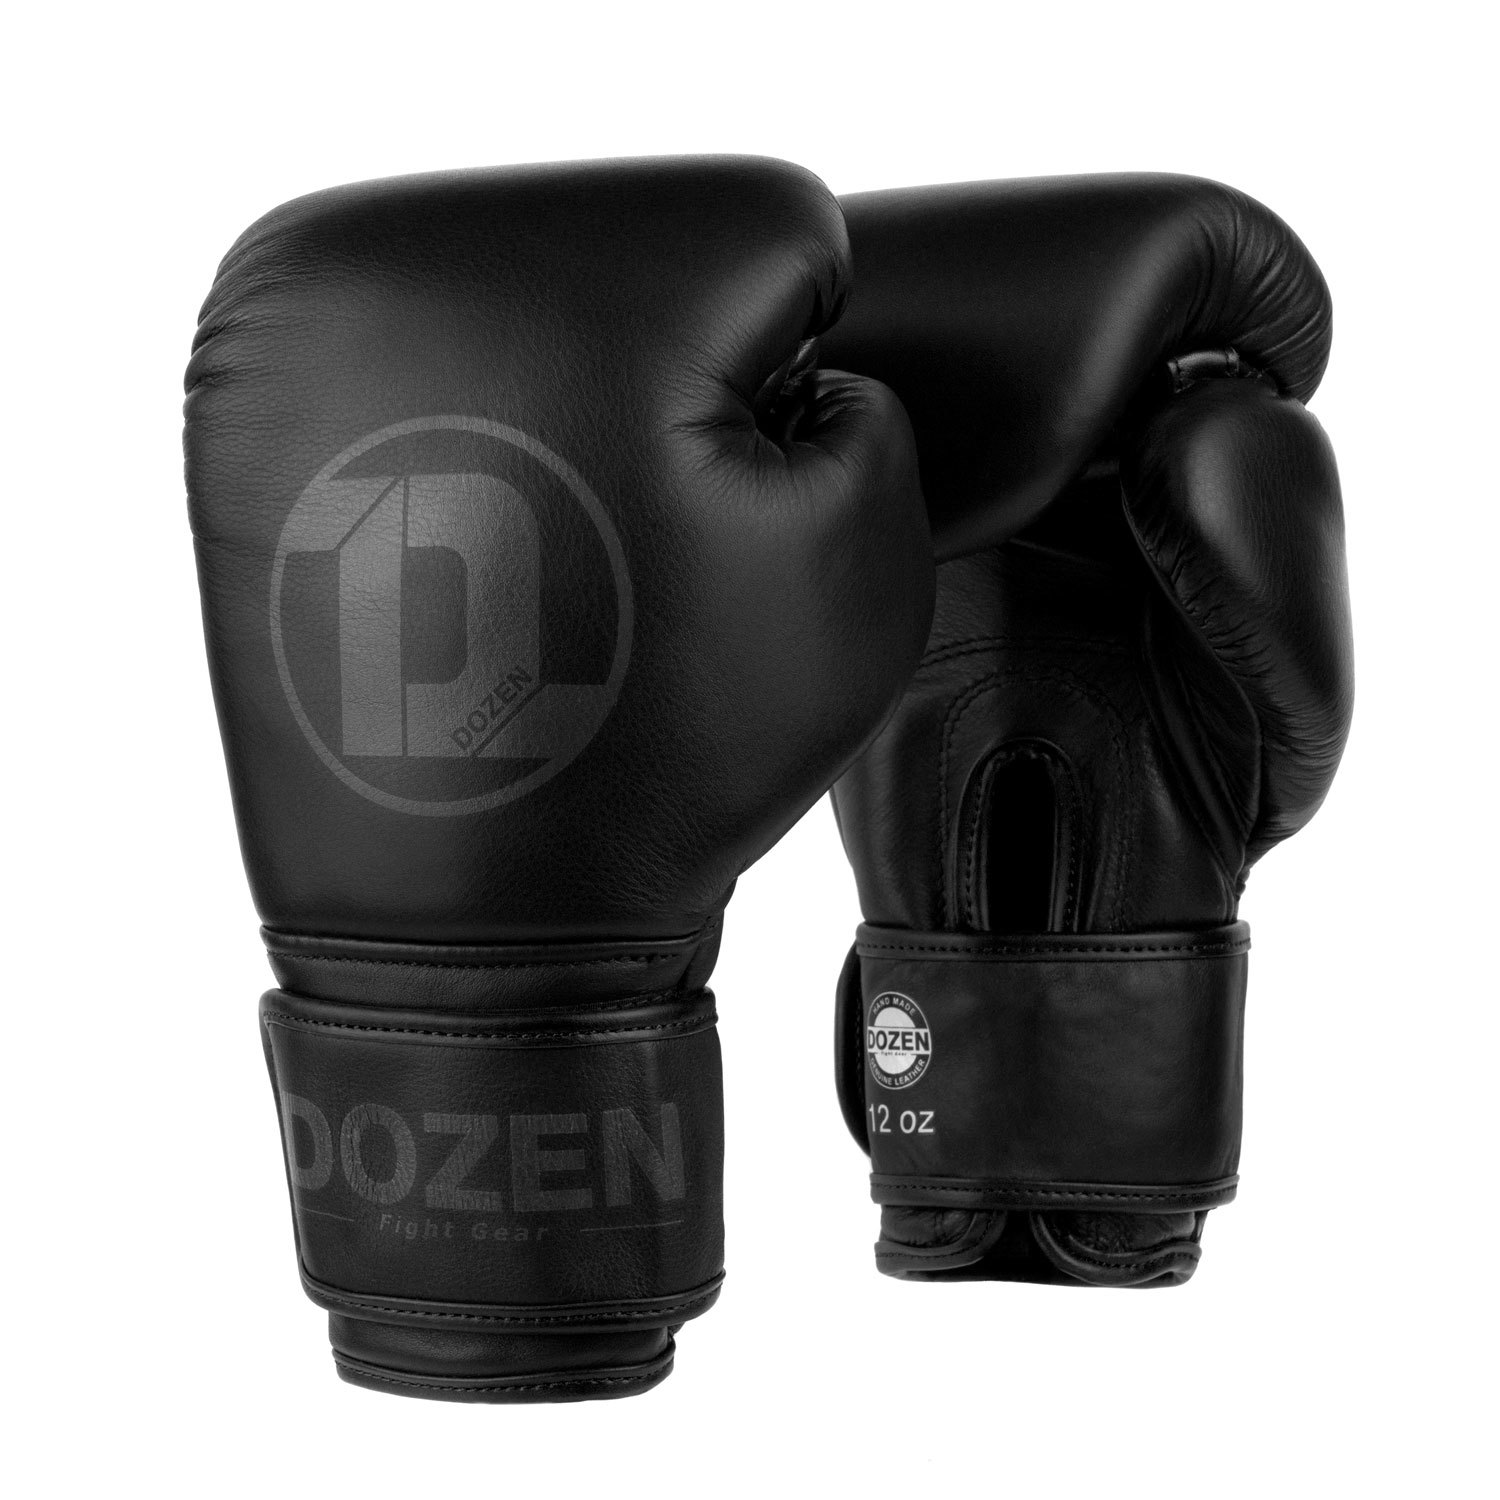 Боксерские перчатки Dozen Monochrome Training Boxing Gloves Black/Black